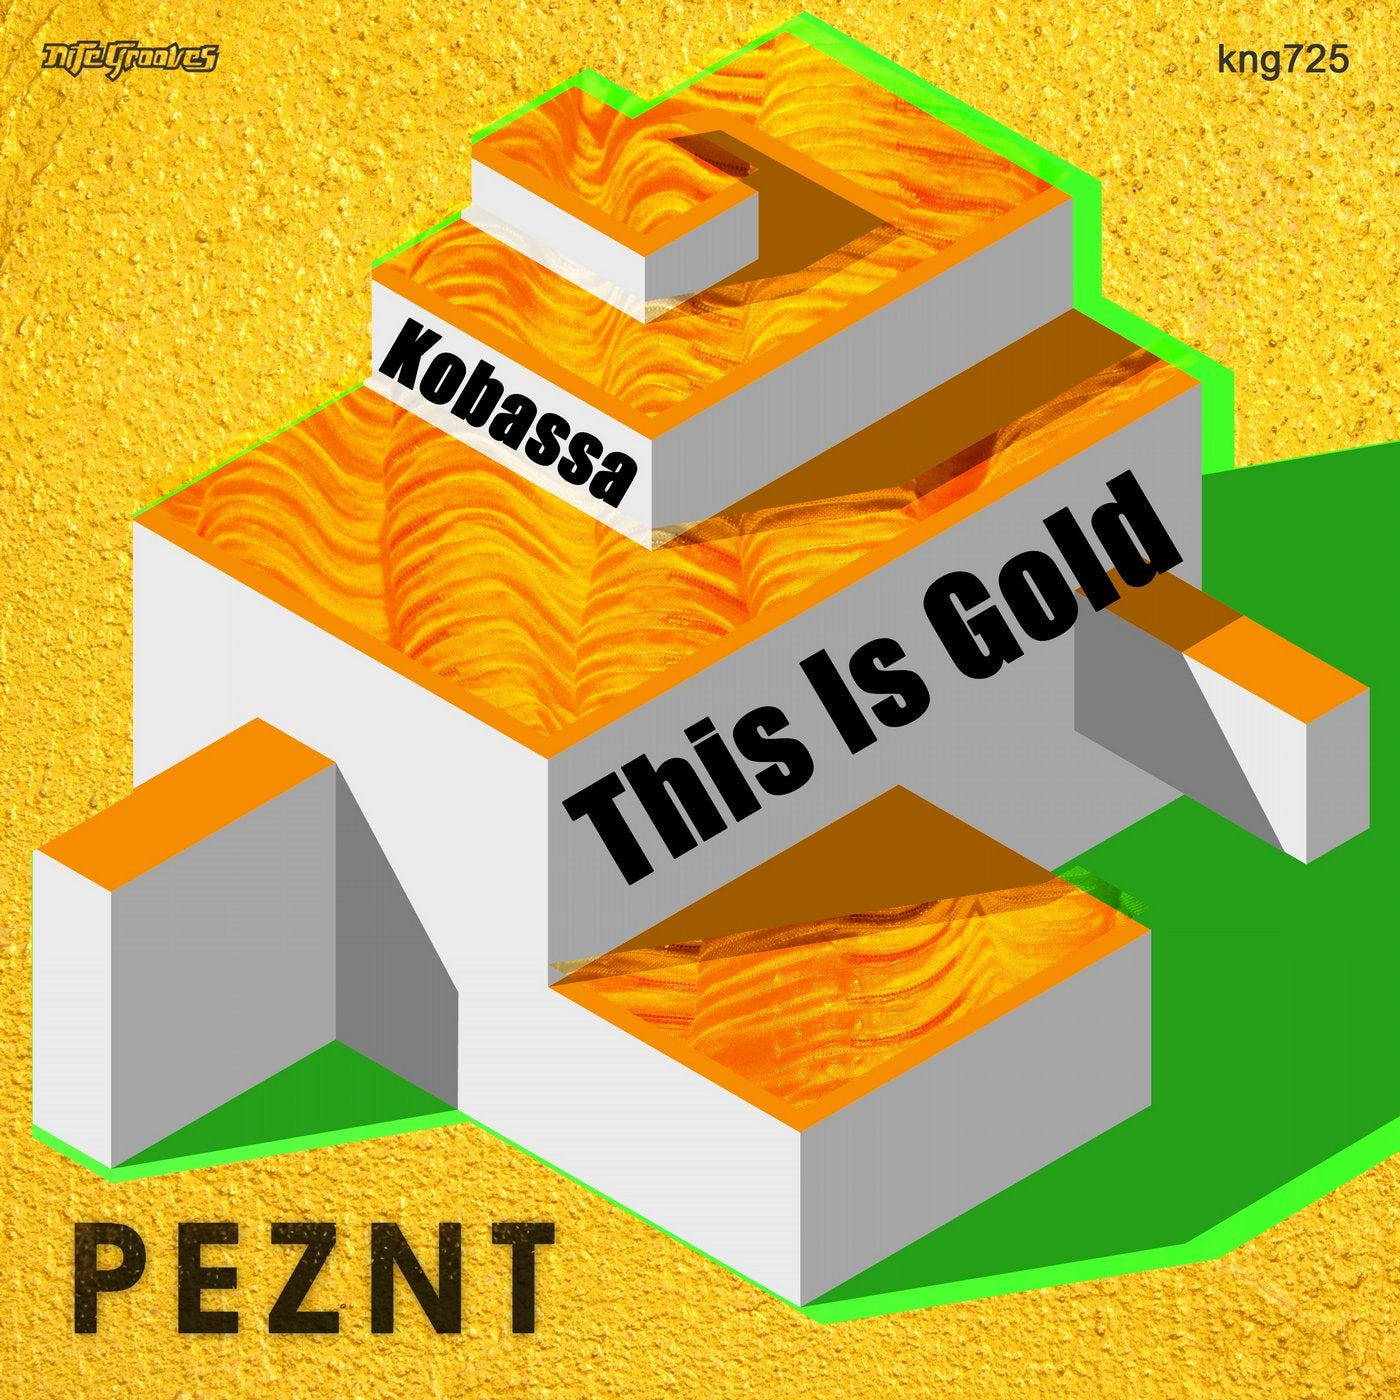 Kobassa / This Is Gold 